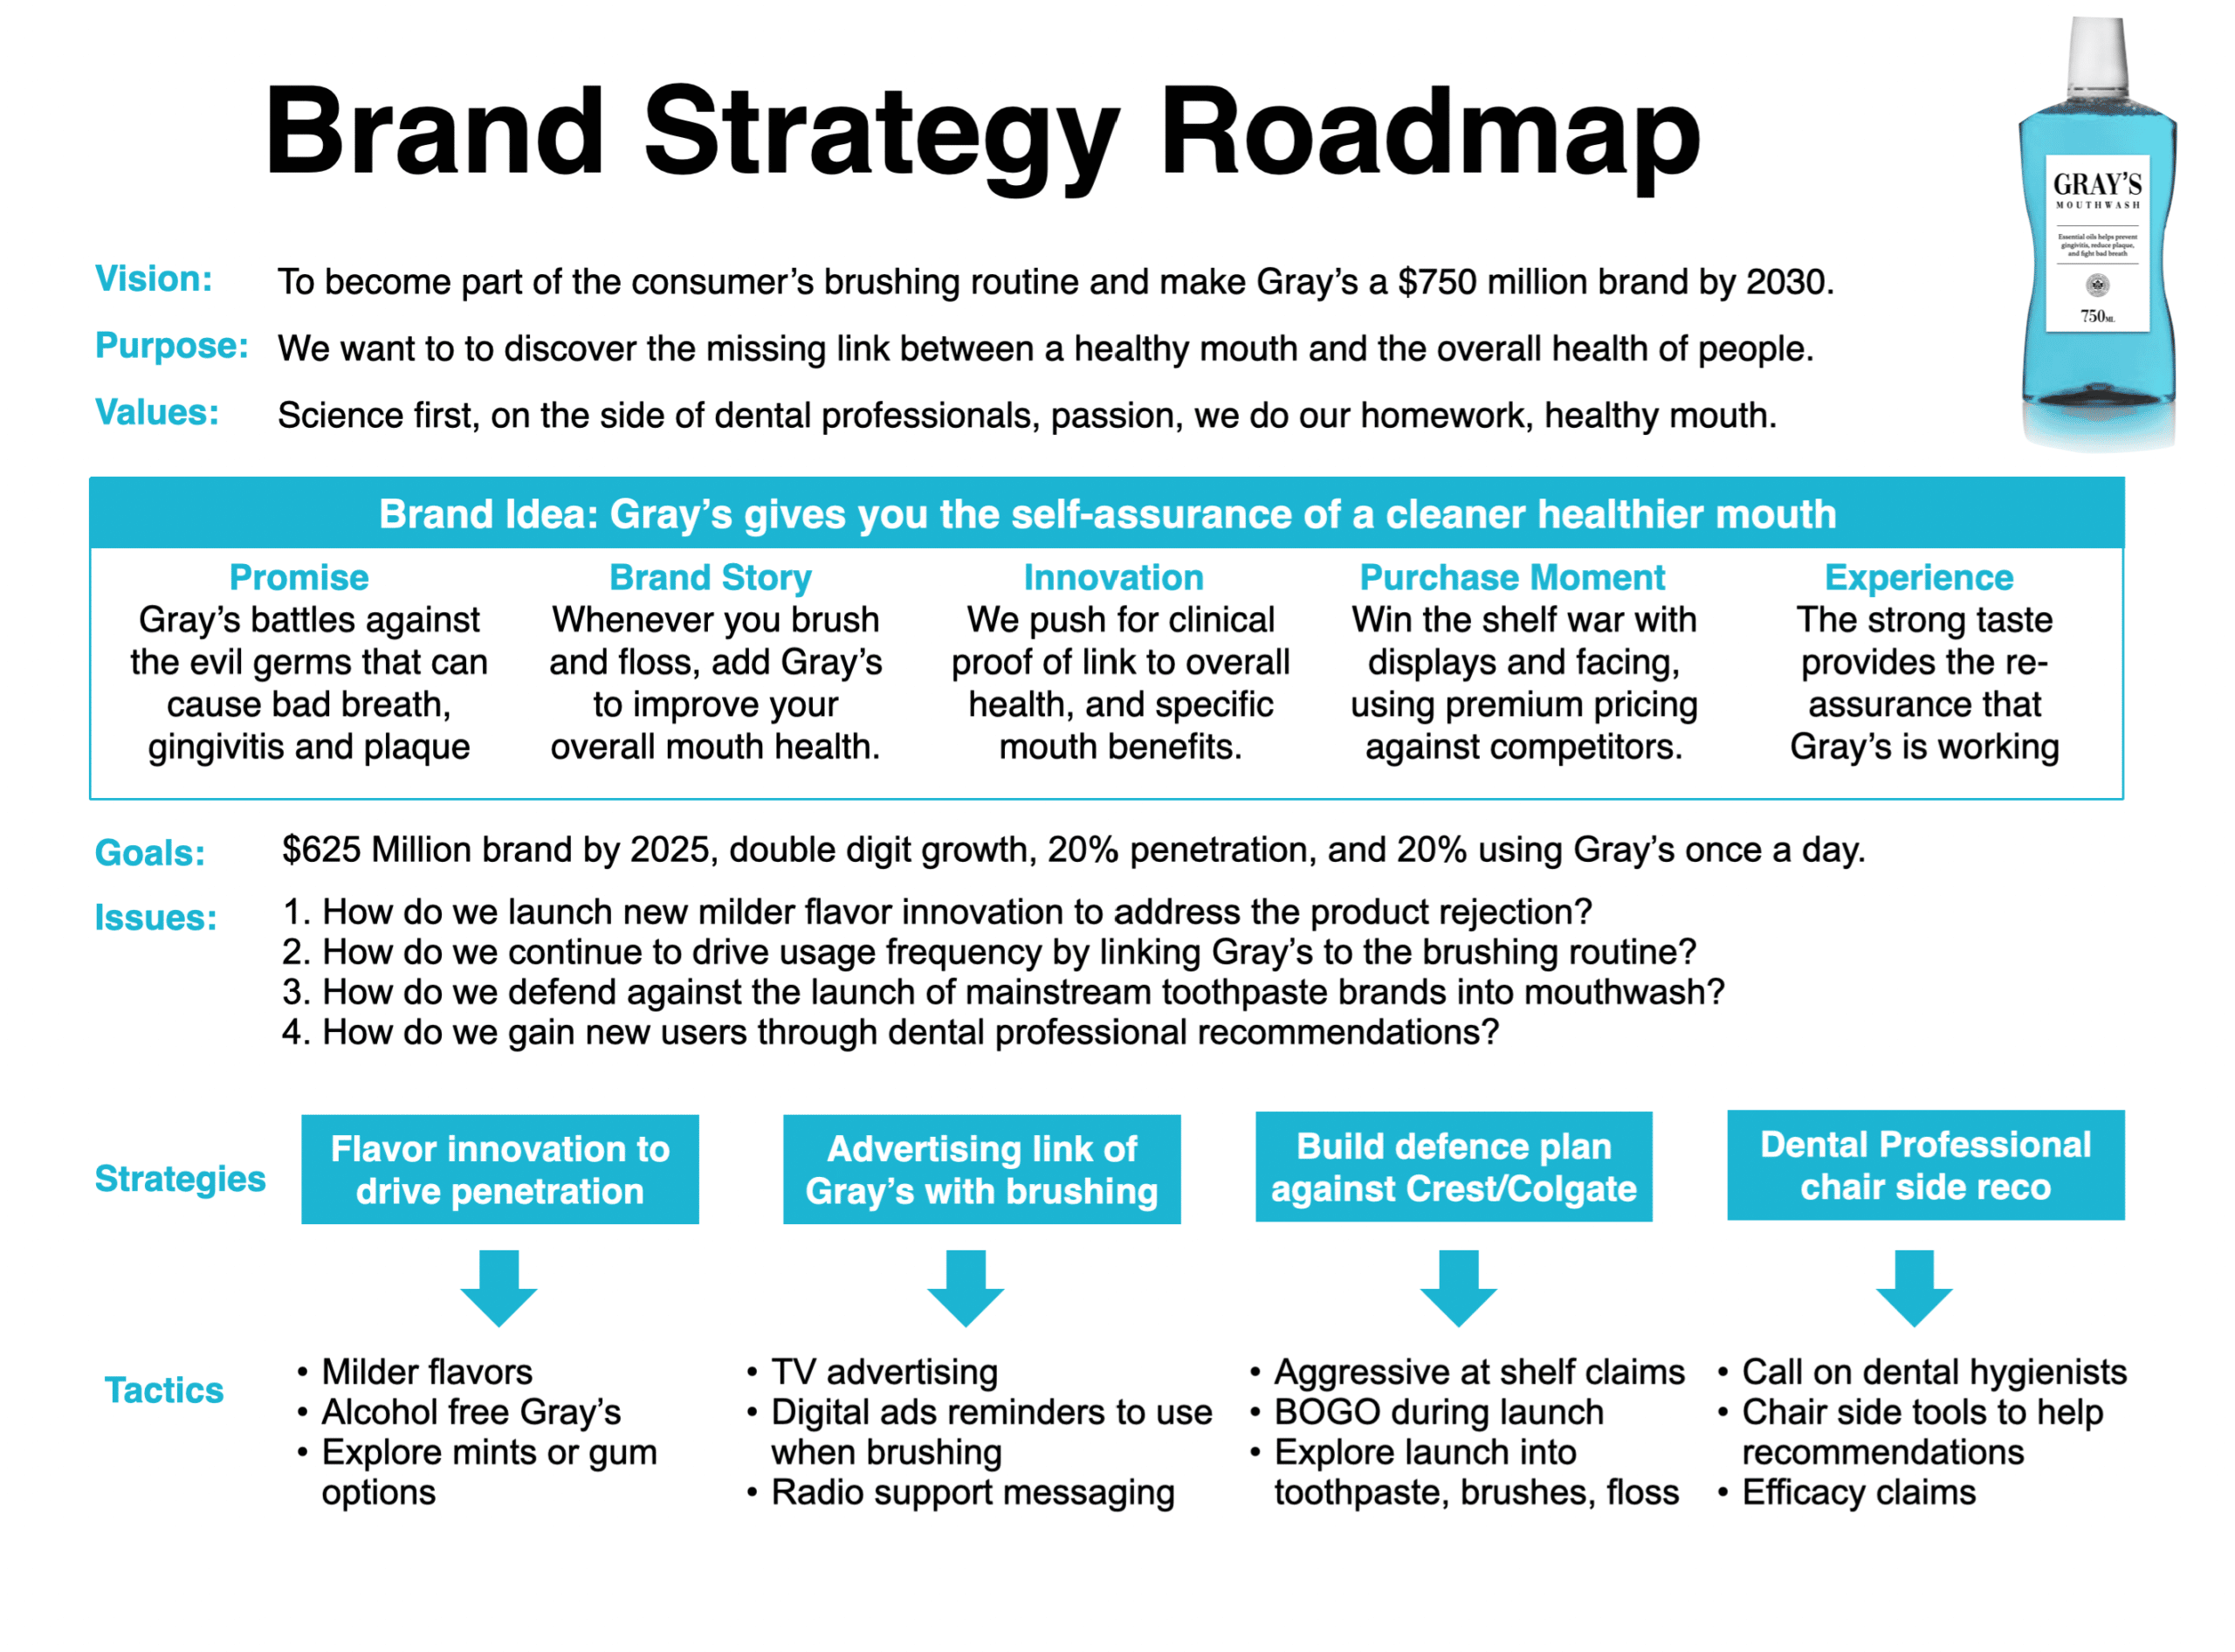 Brand Strategy Roadmap Consumer brands